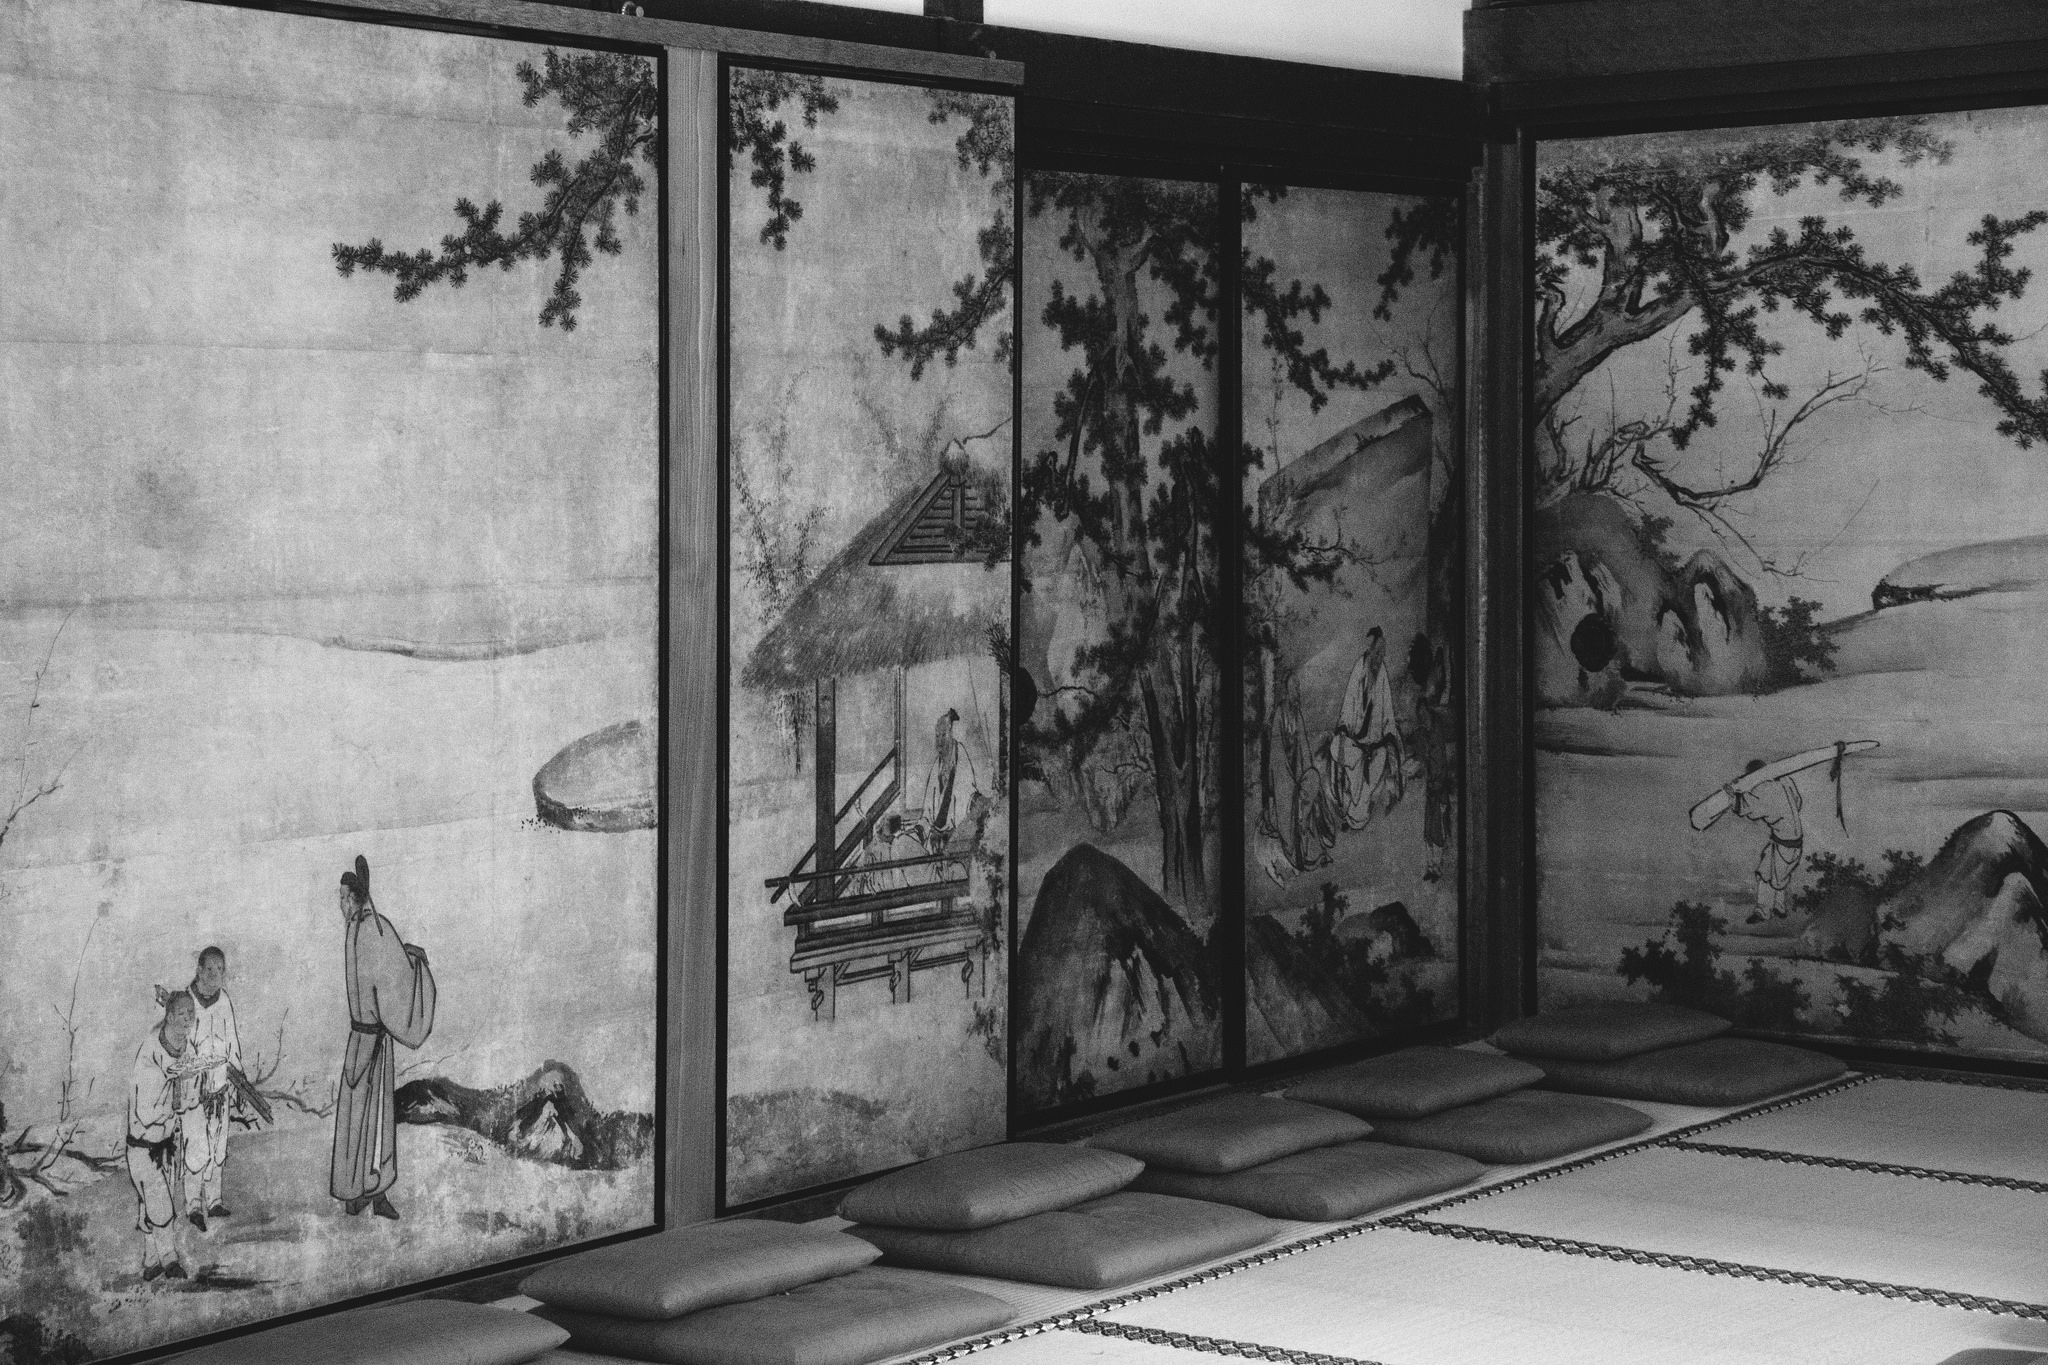 Japan: Lost in Kyoto - Cocoskies | Illustration, design & travel blog